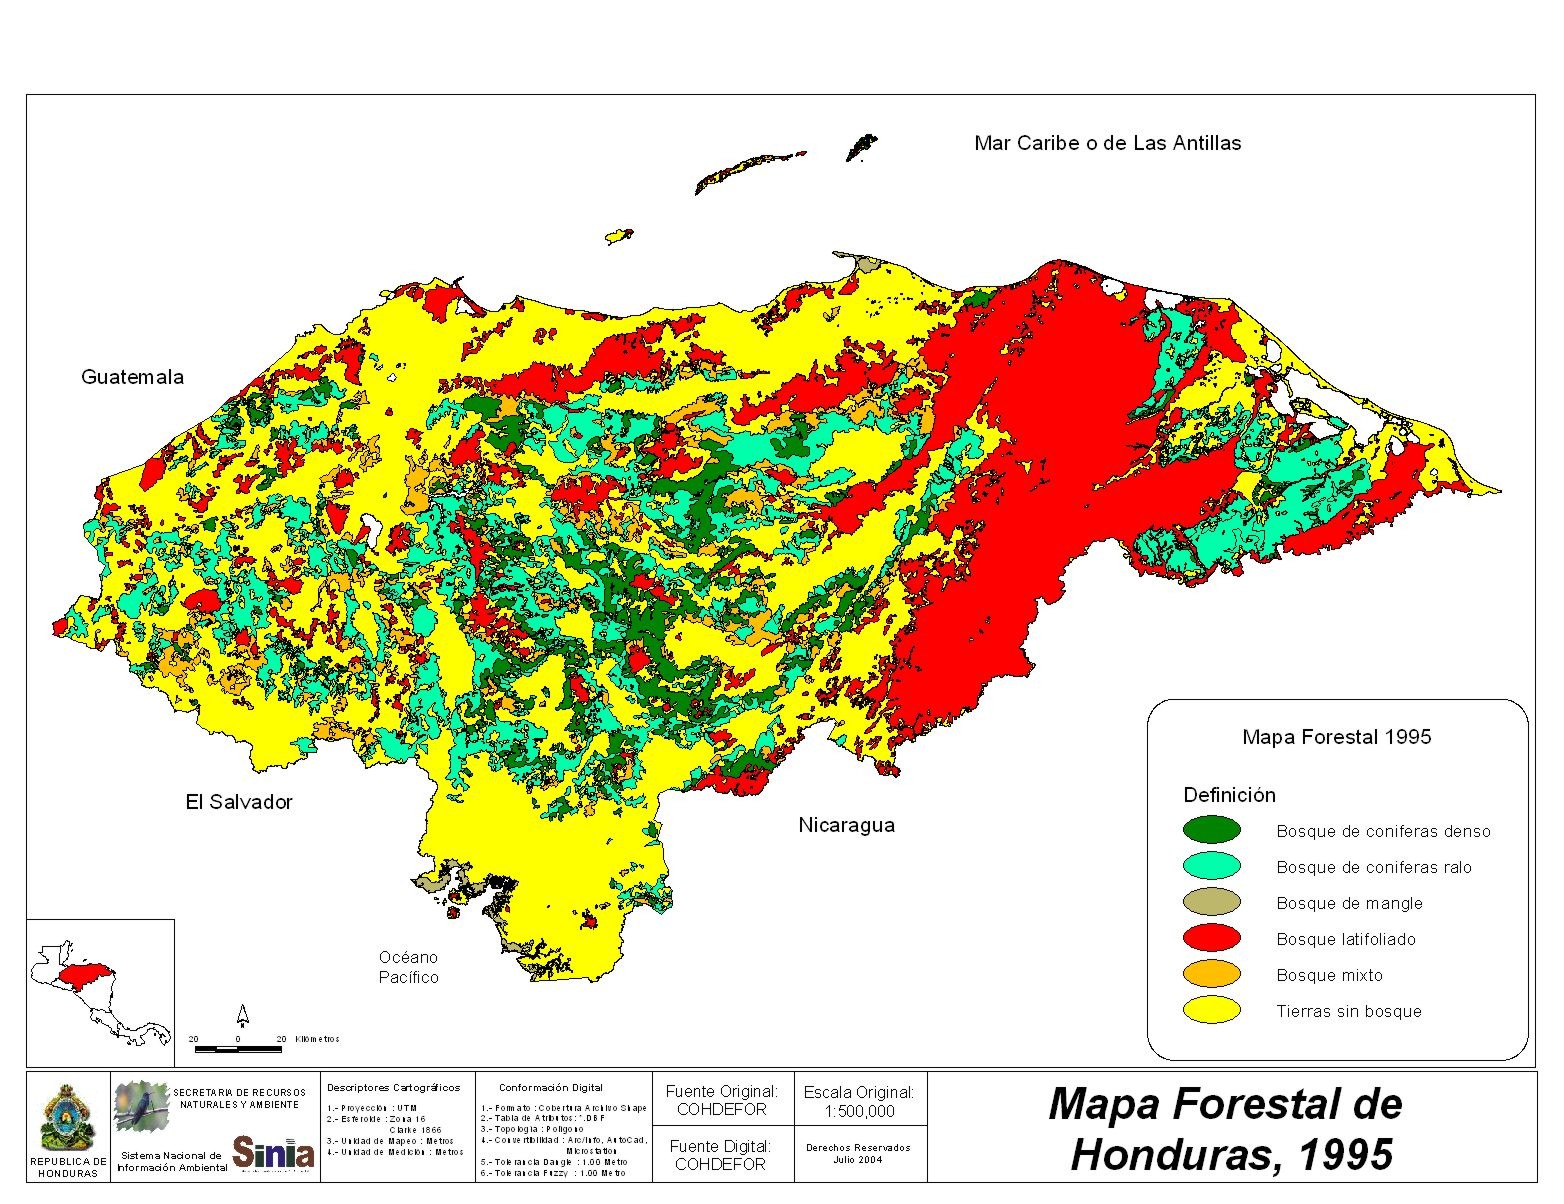 Mapa Forestal de Honduras